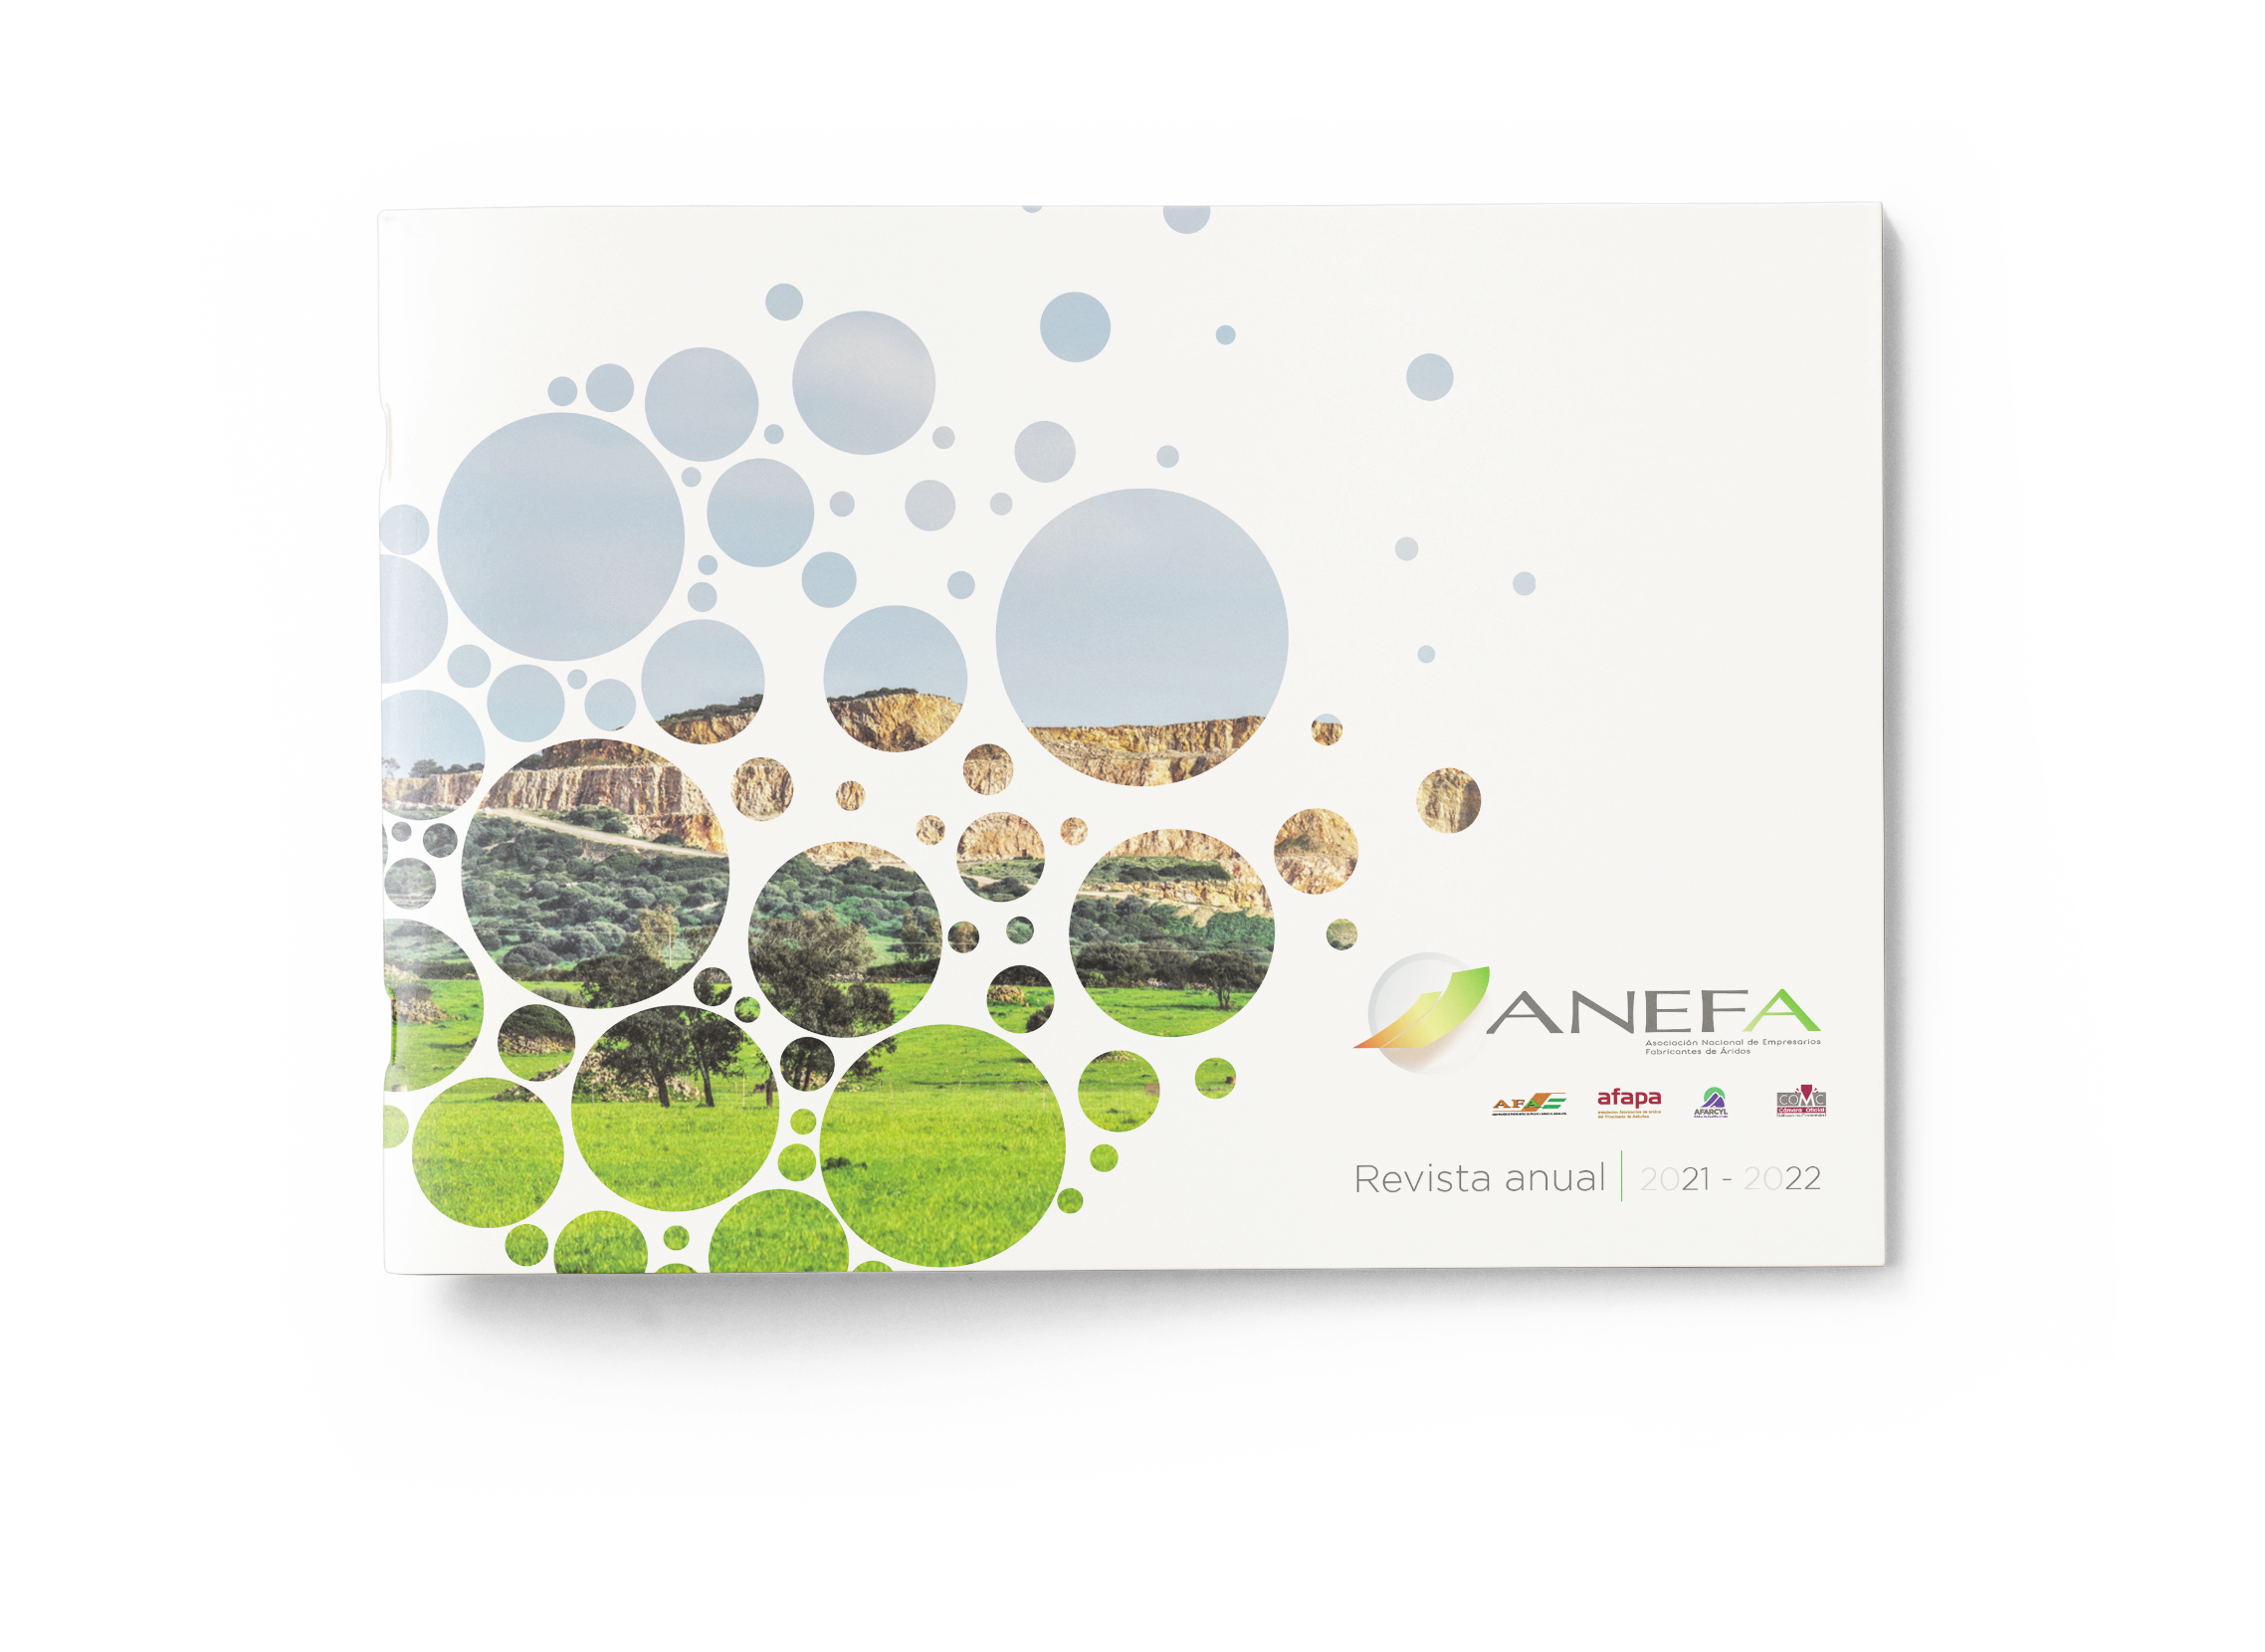 Revista anual ANEFA 2018-2019